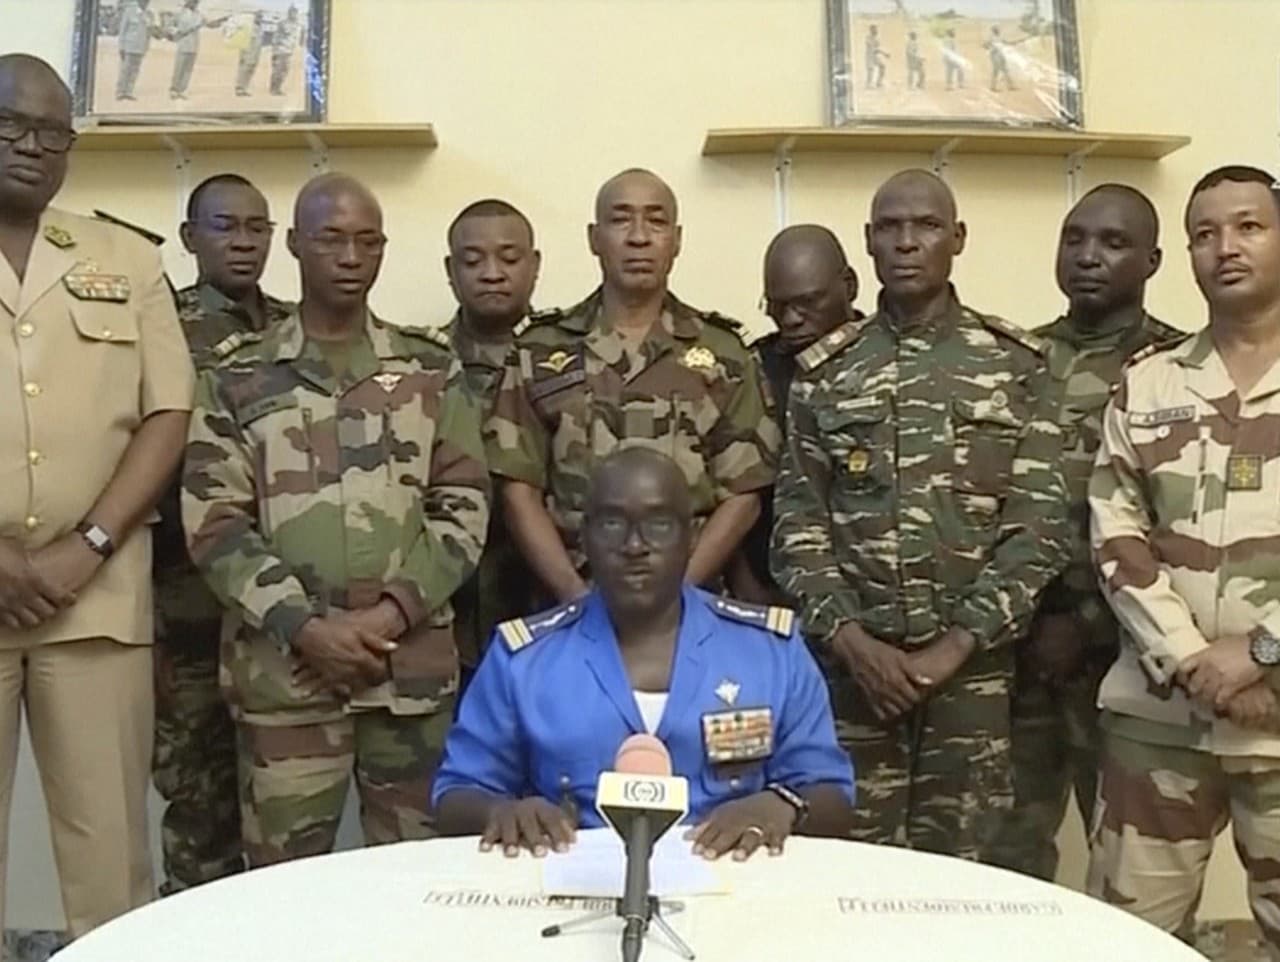 Vojaci v Nigeri zvrhli prezidenta Mohameda Bazouma.